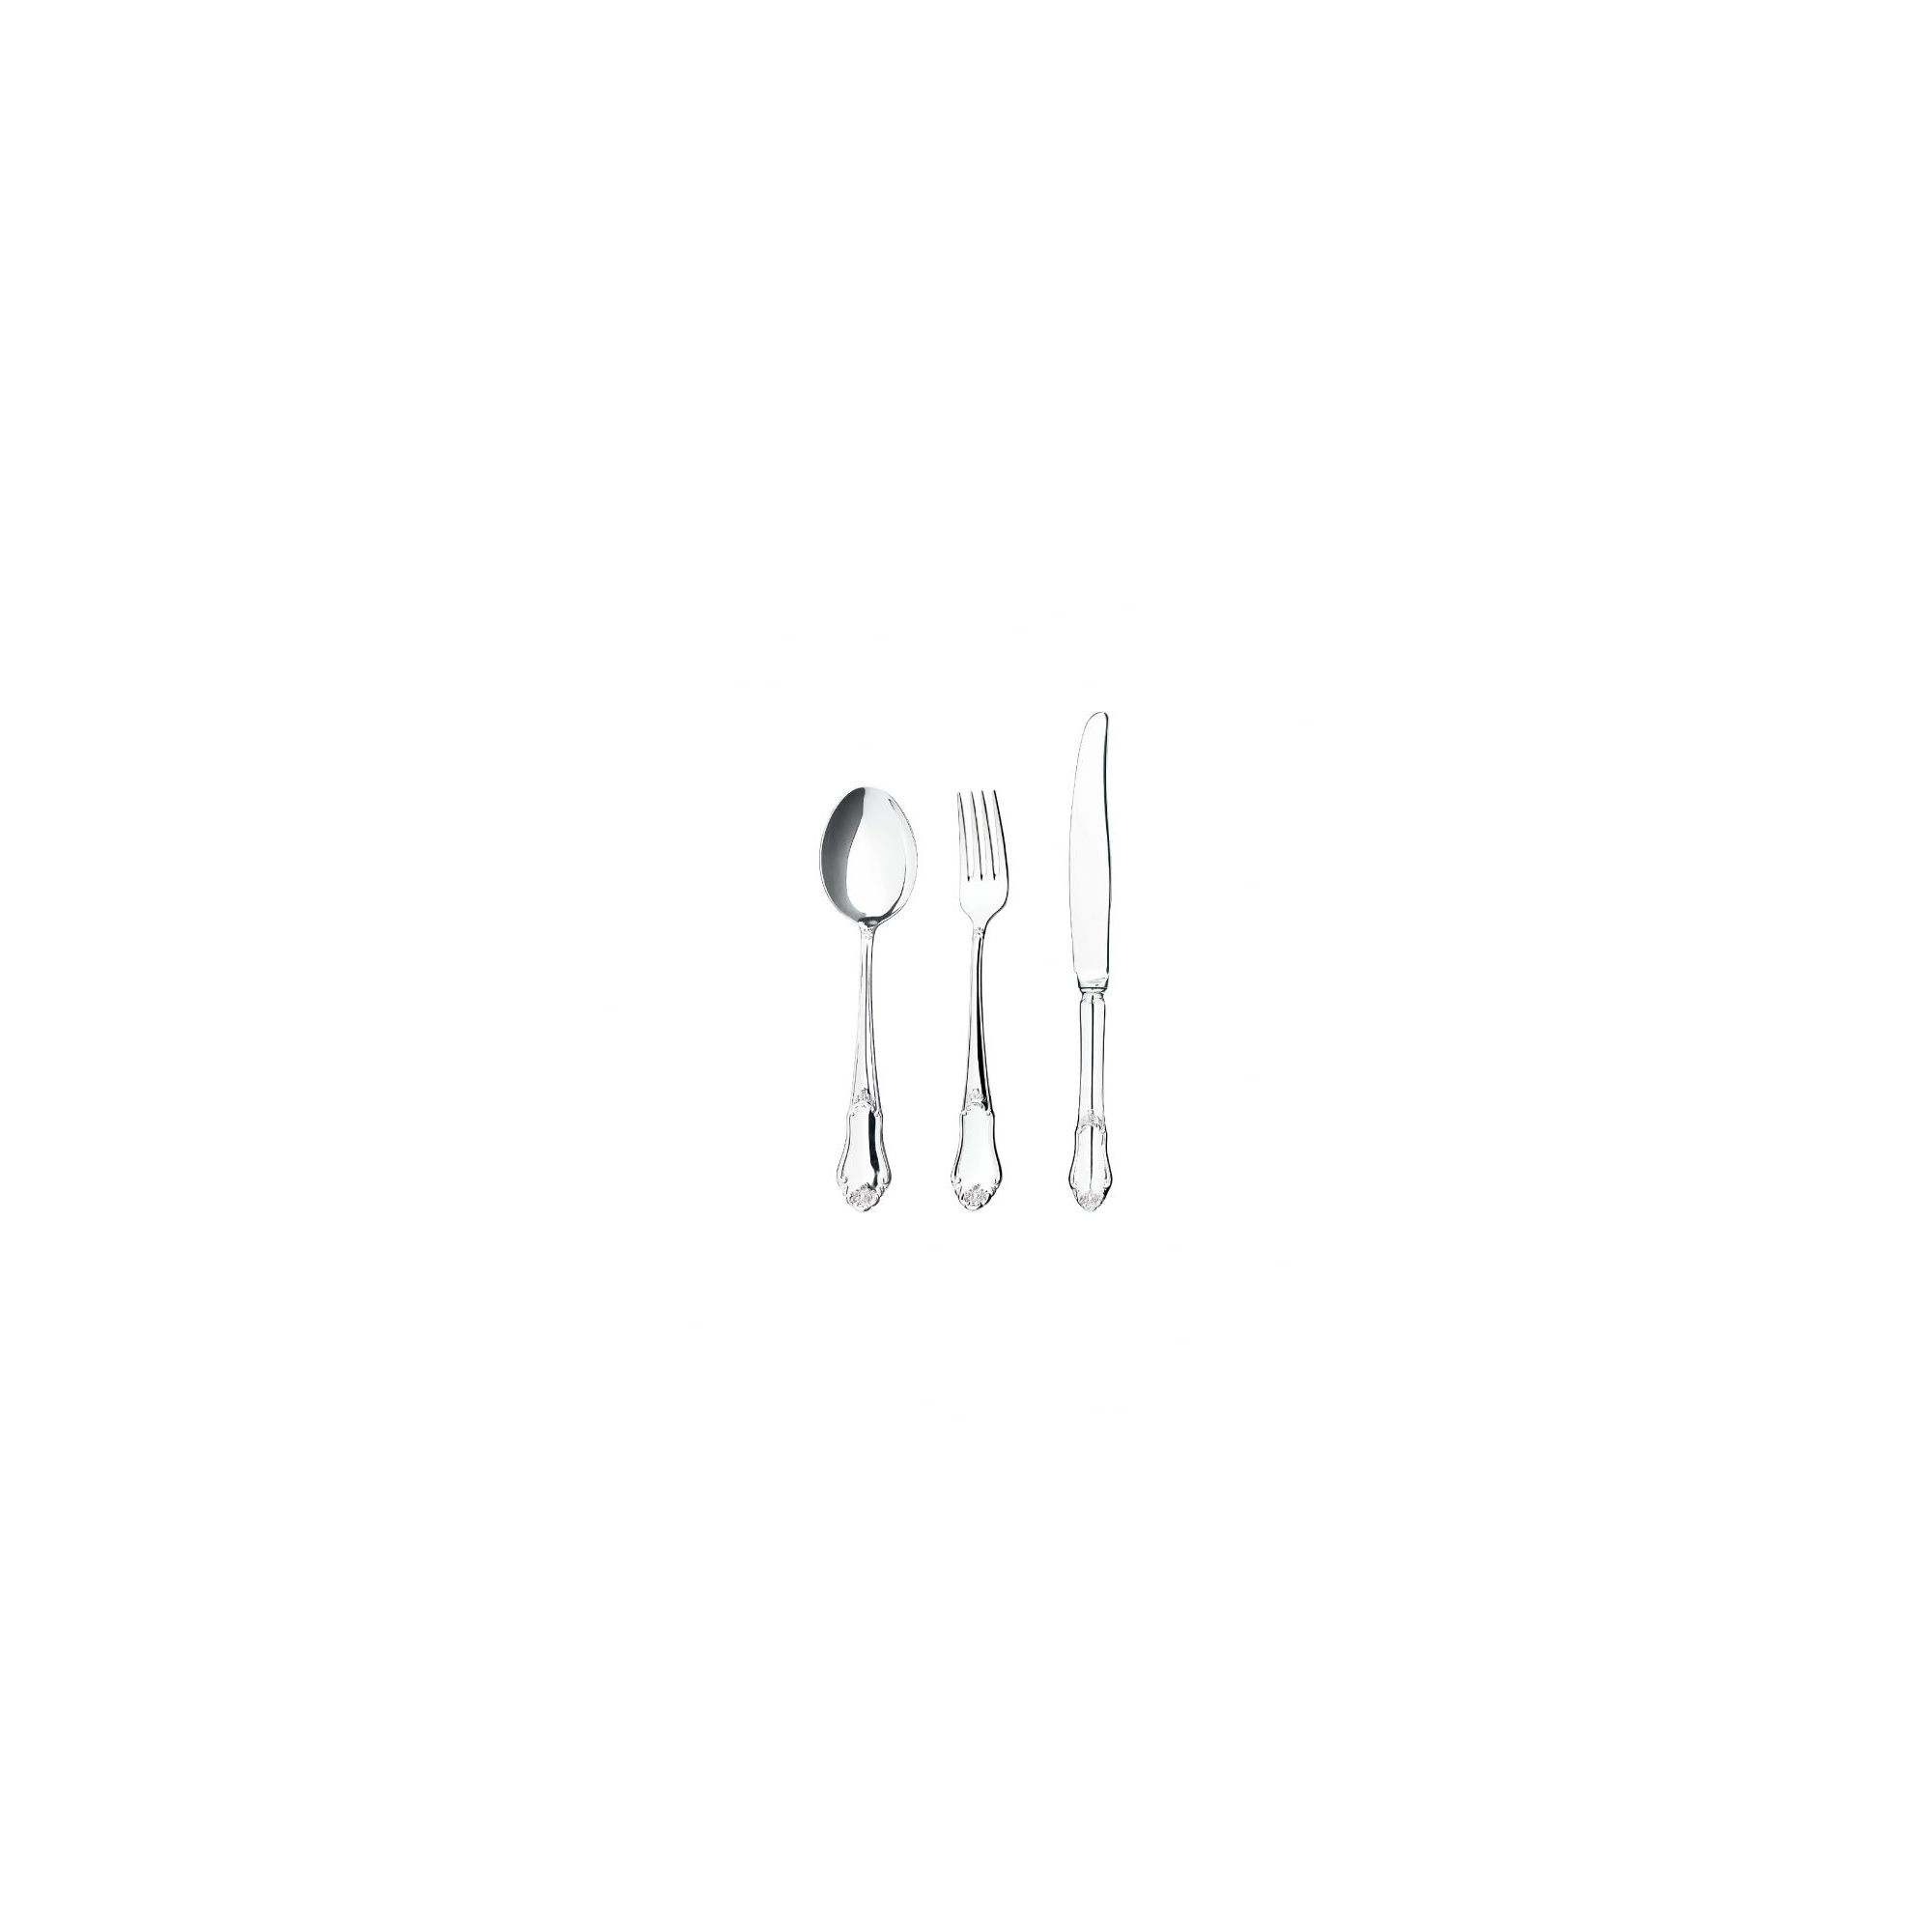 Mema/GAB Eva 12 Piece Silver Plated Cutlery Set 1 at Tesco Direct